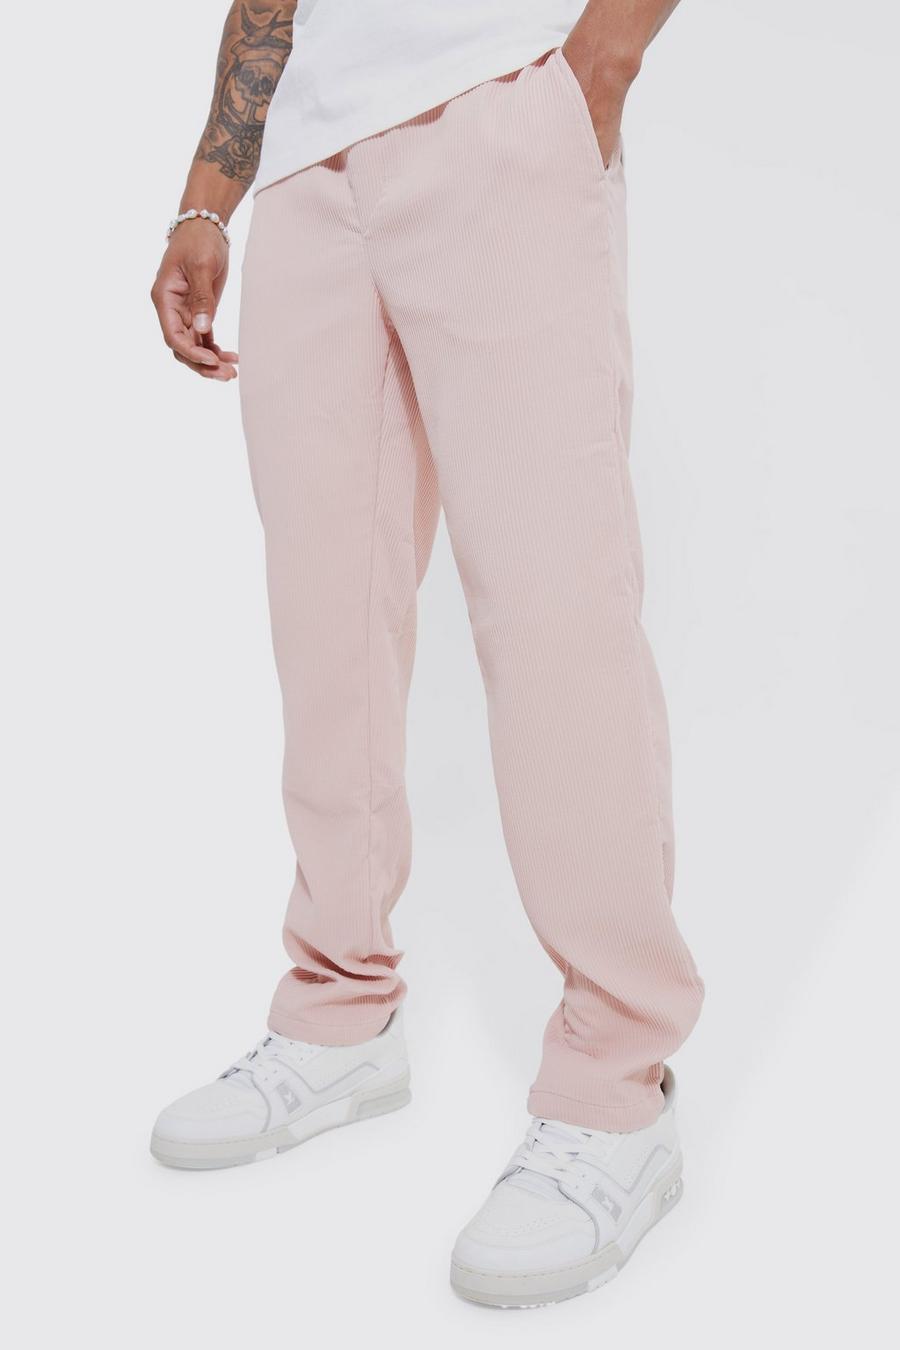 Pantaloni Slim Fit con pieghe, Light pink rosa